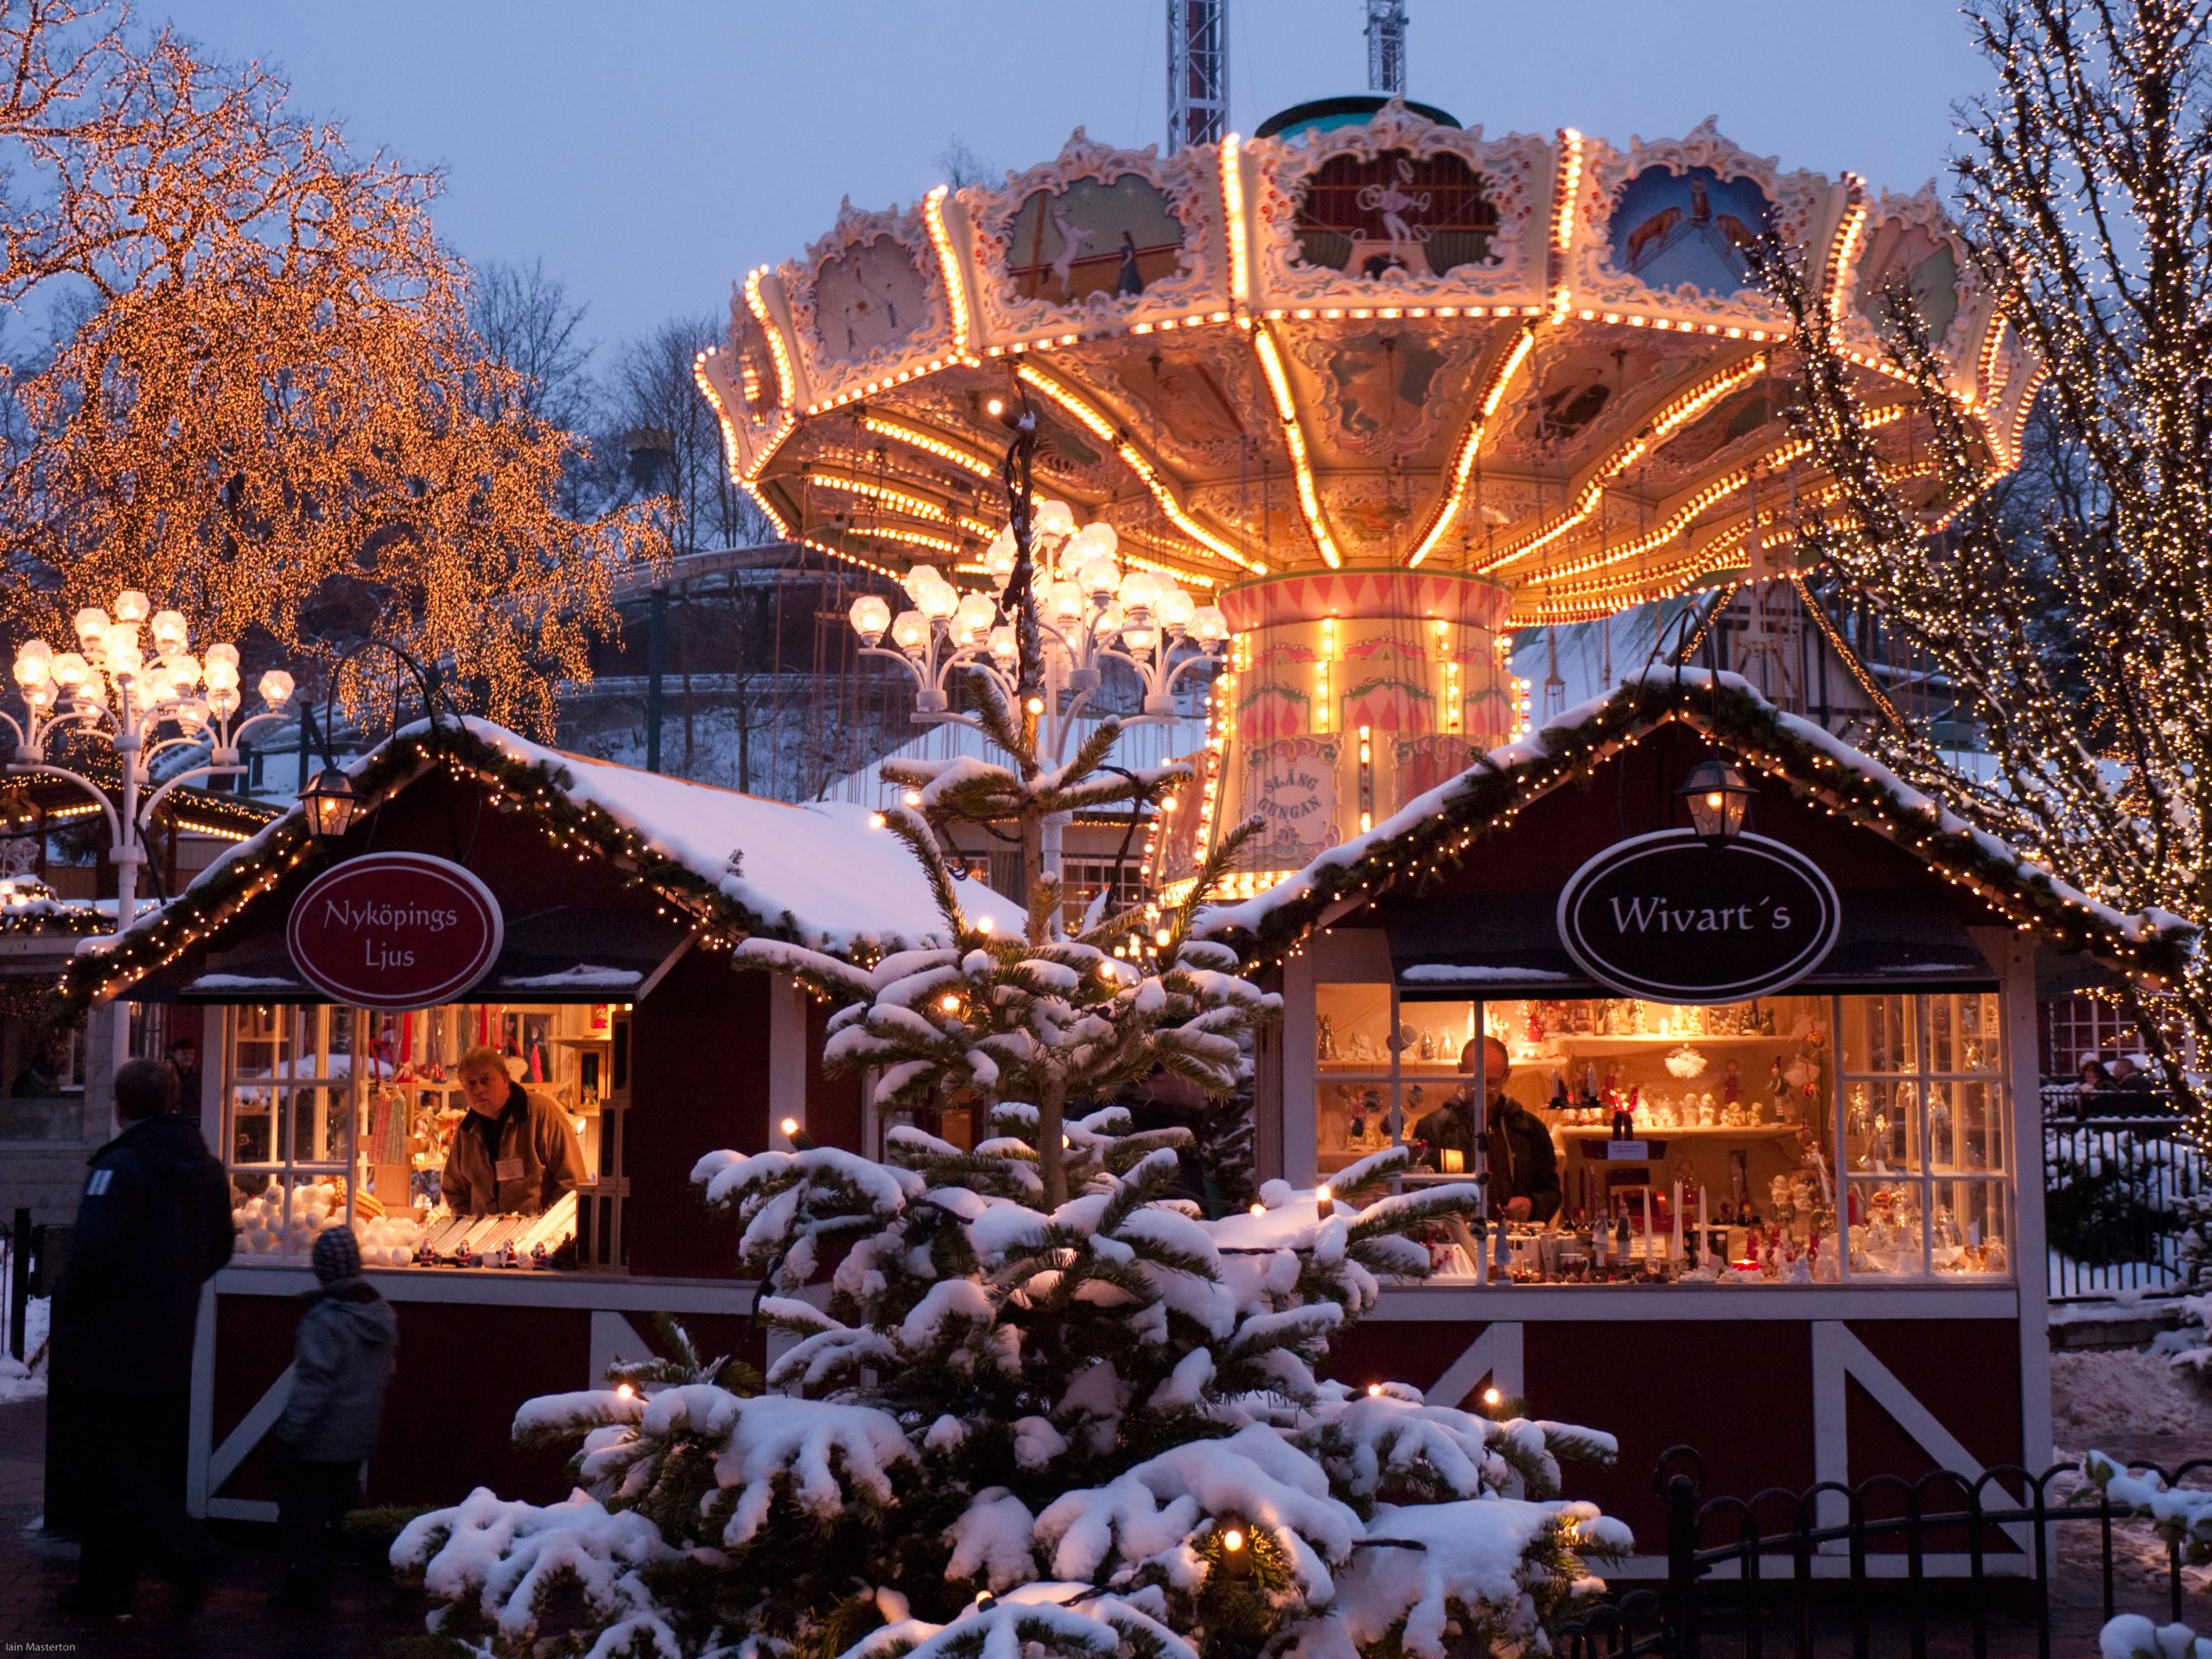 Gothenburg Christmas Market - Best Christmas Markets in Europe